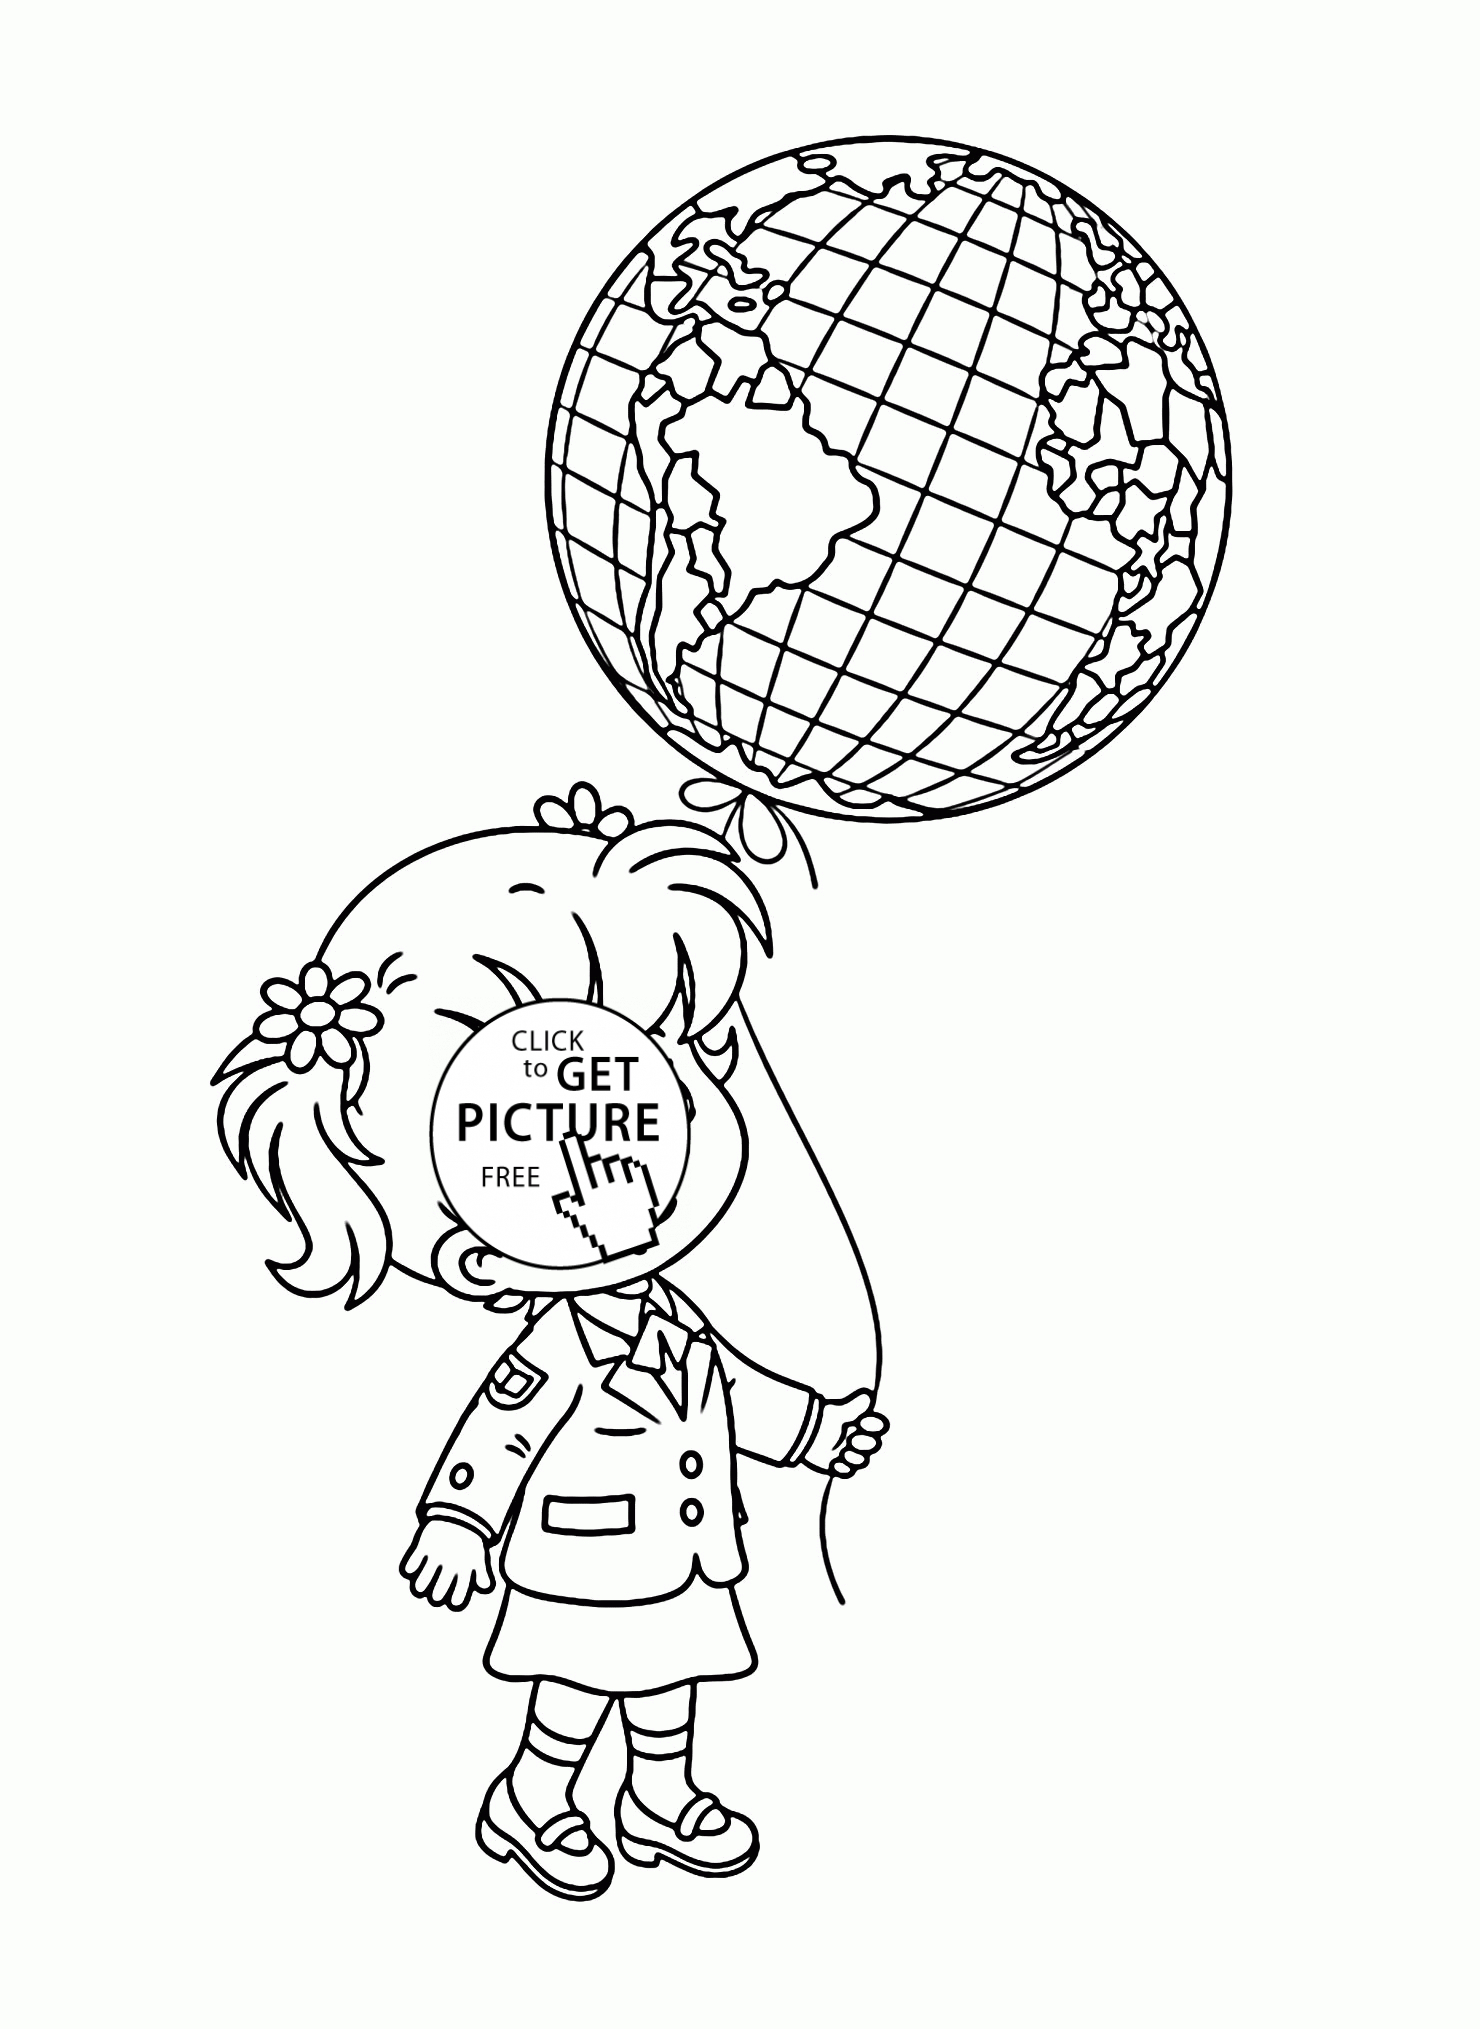 Coloring Page Girl Girl And Balloon Globe Earth Day Coloring Page For Kids Coloring